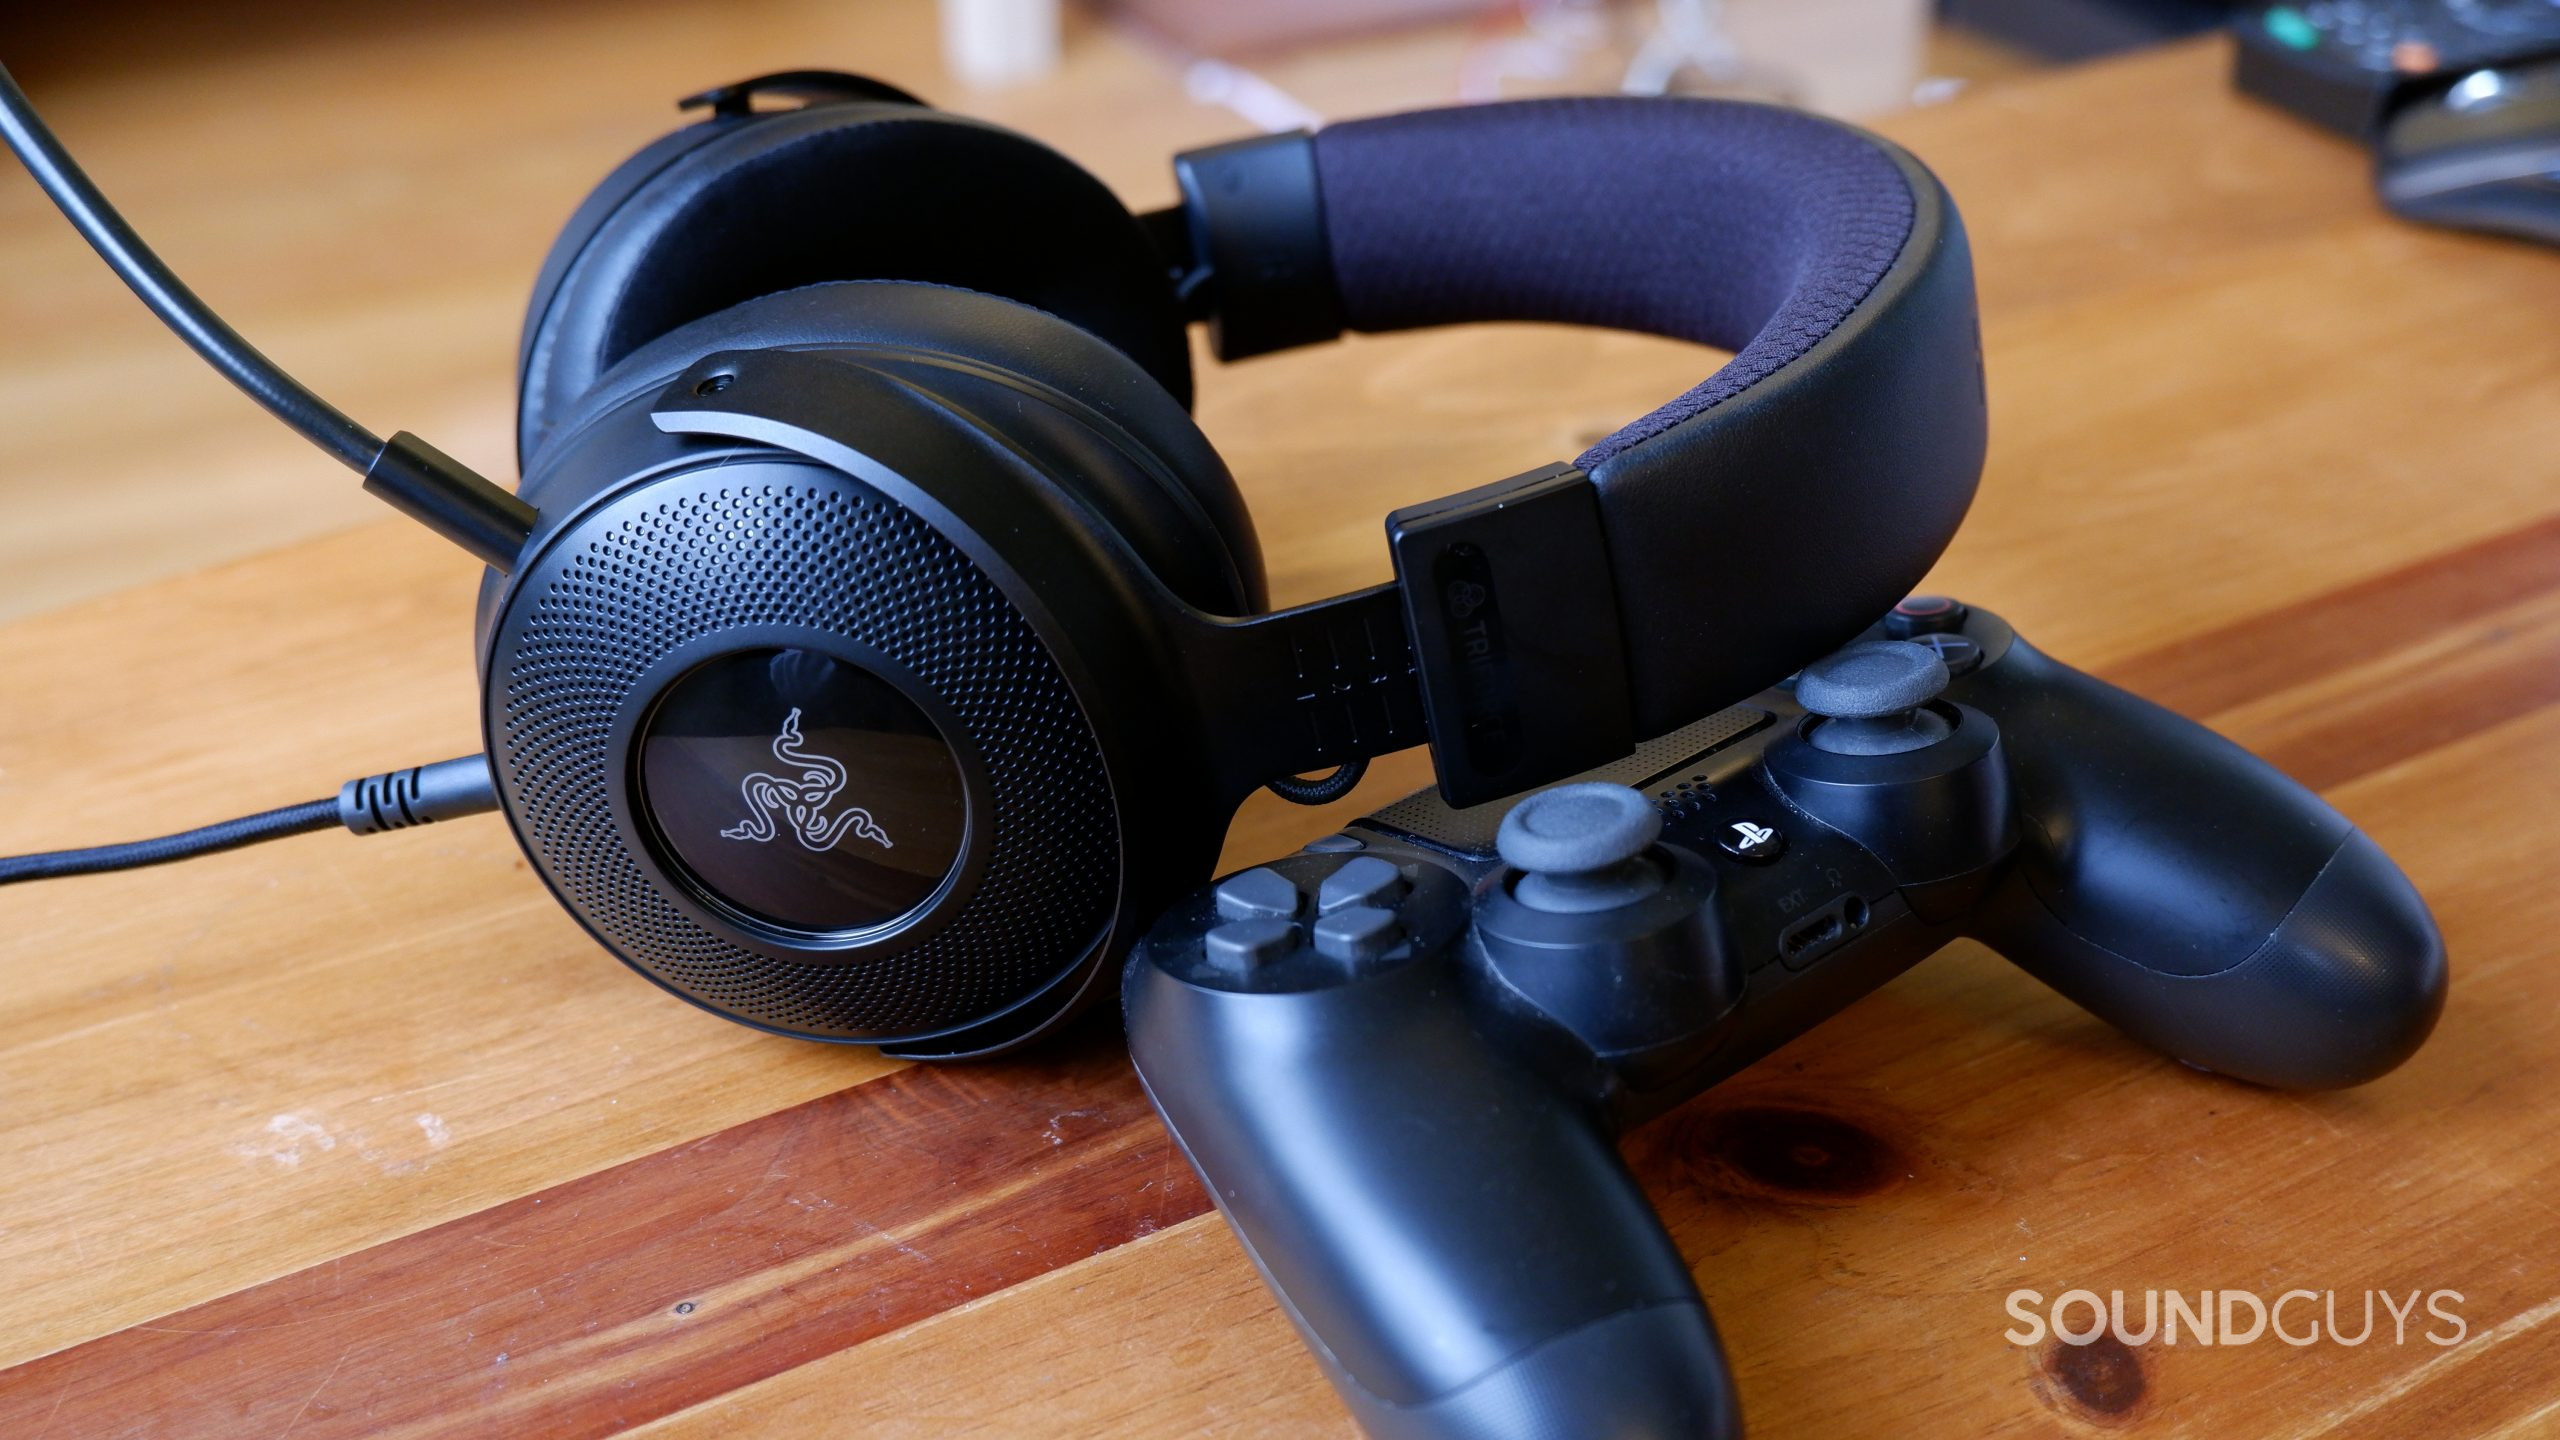 Razer Kraken X review: A solid headset on the cheap - SoundGuys